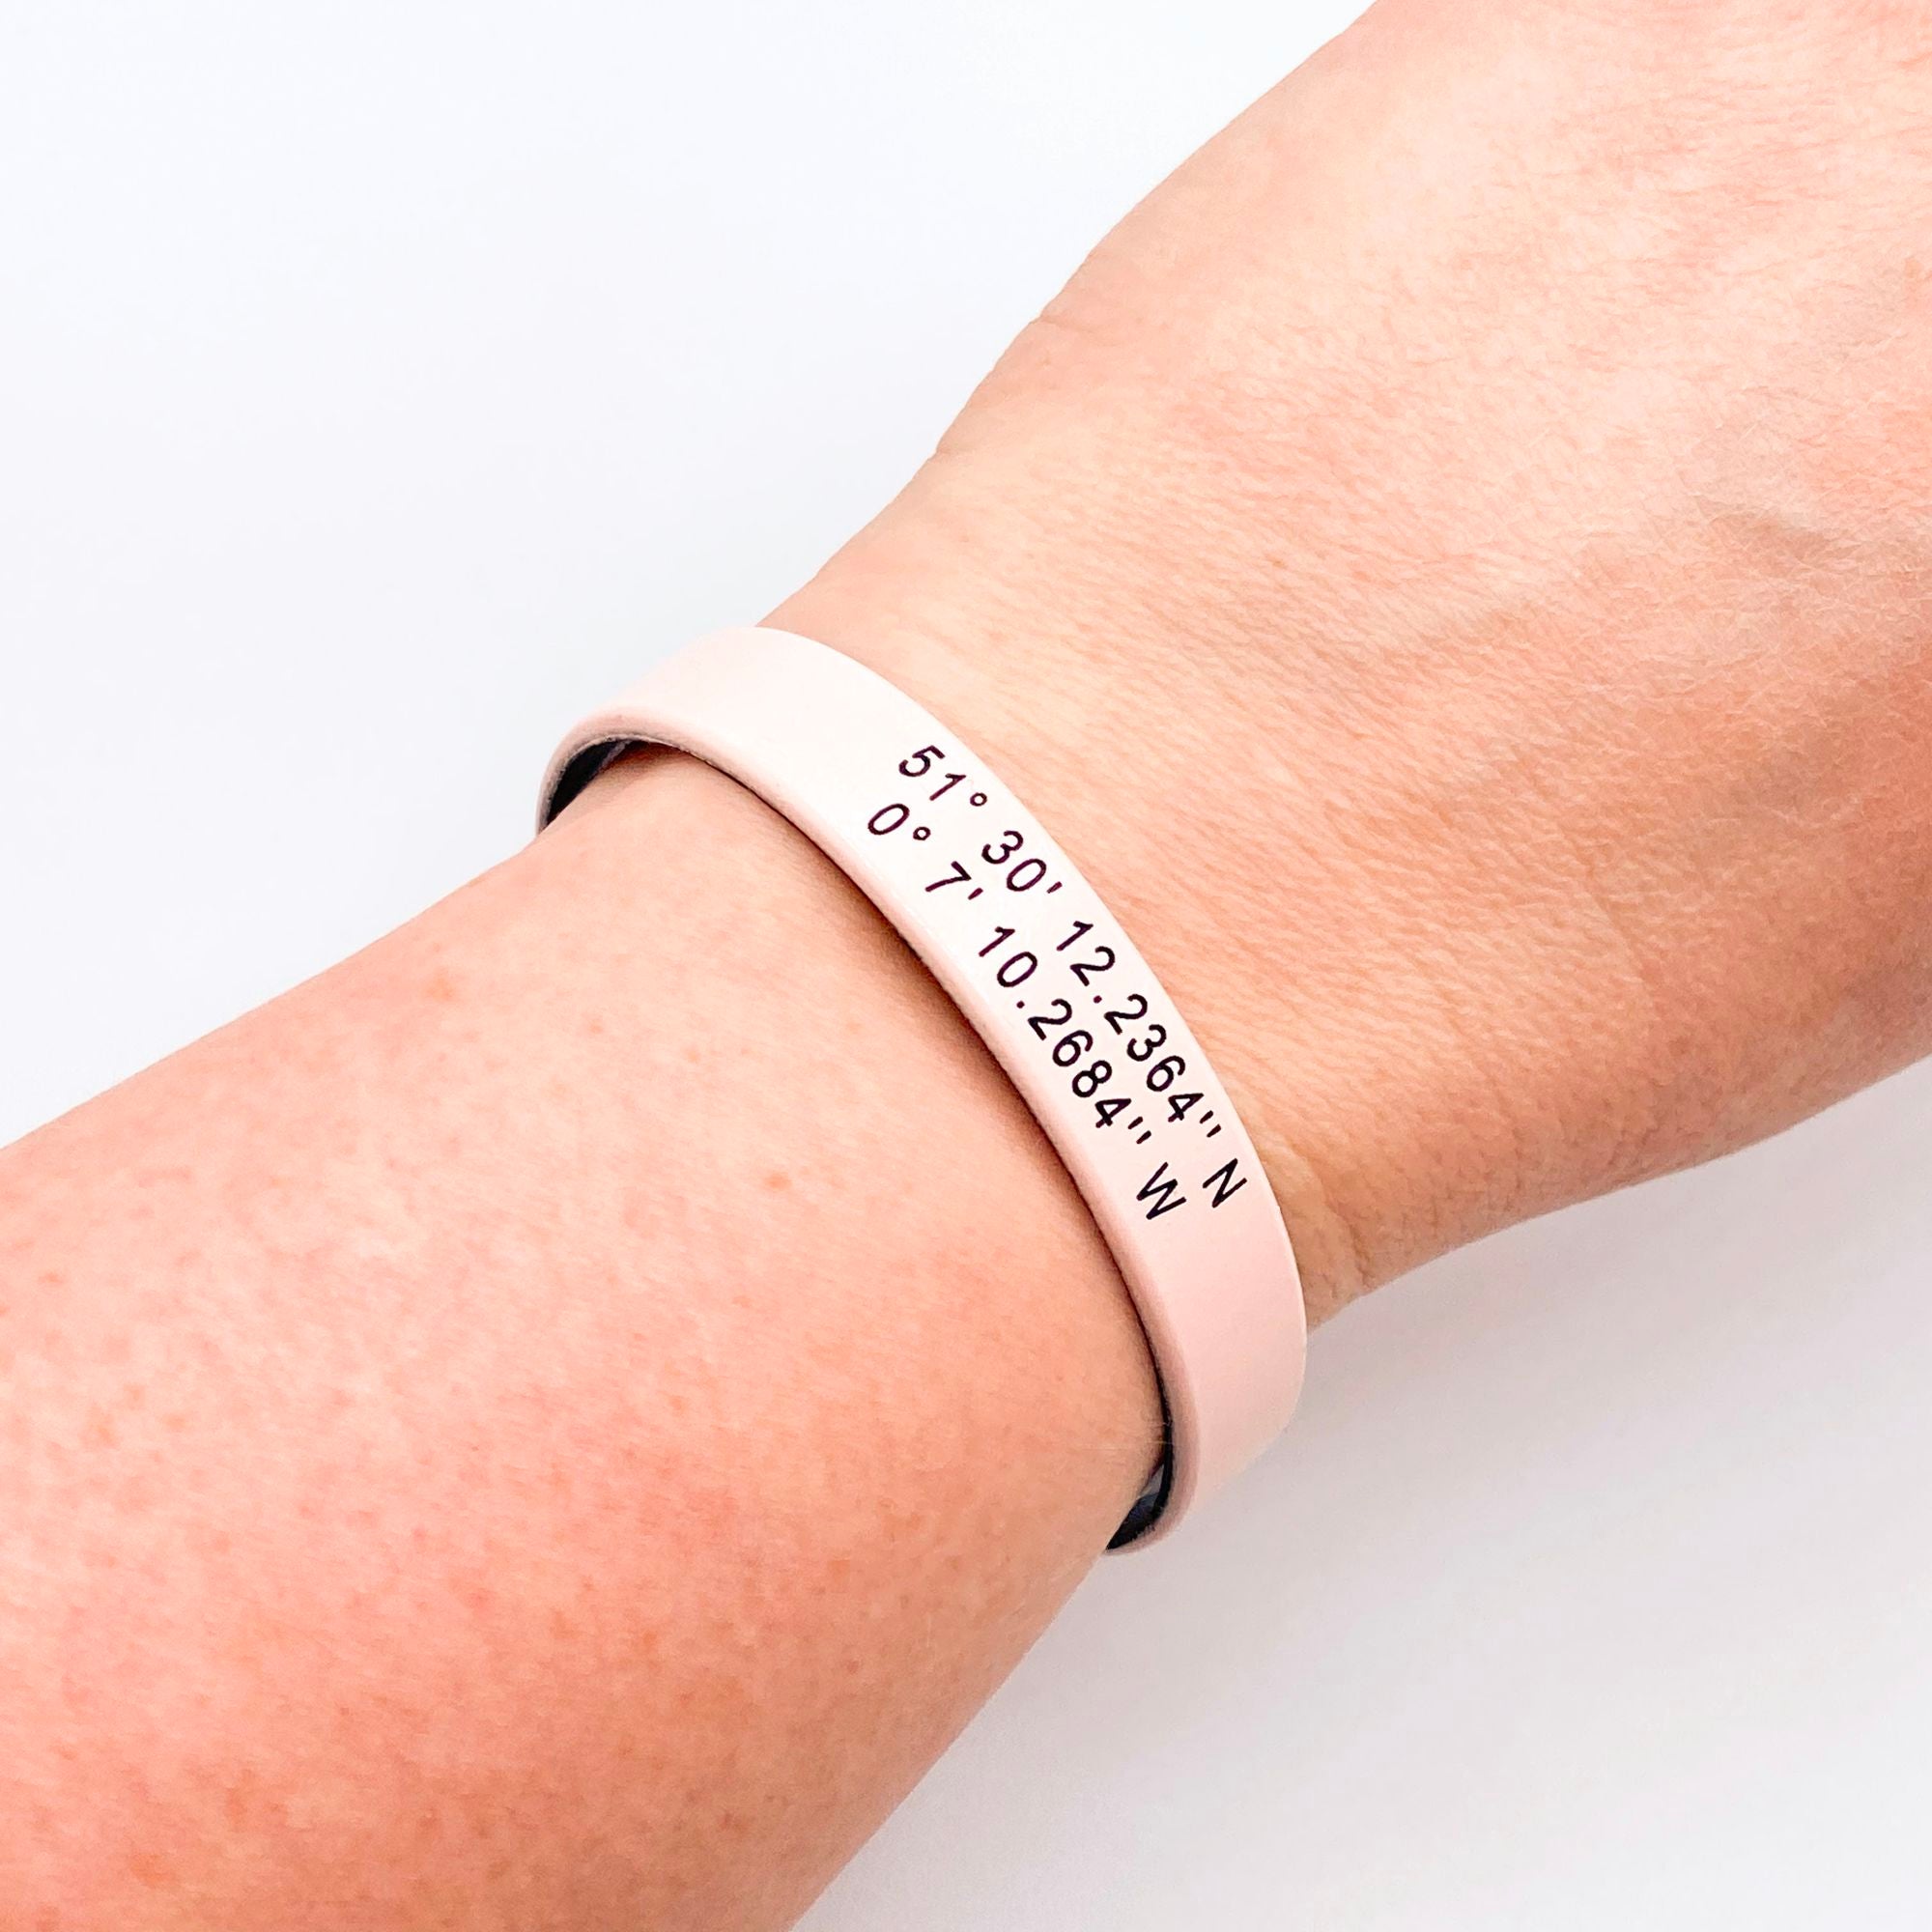 grid coordinates personalised wristband blush pink black gift